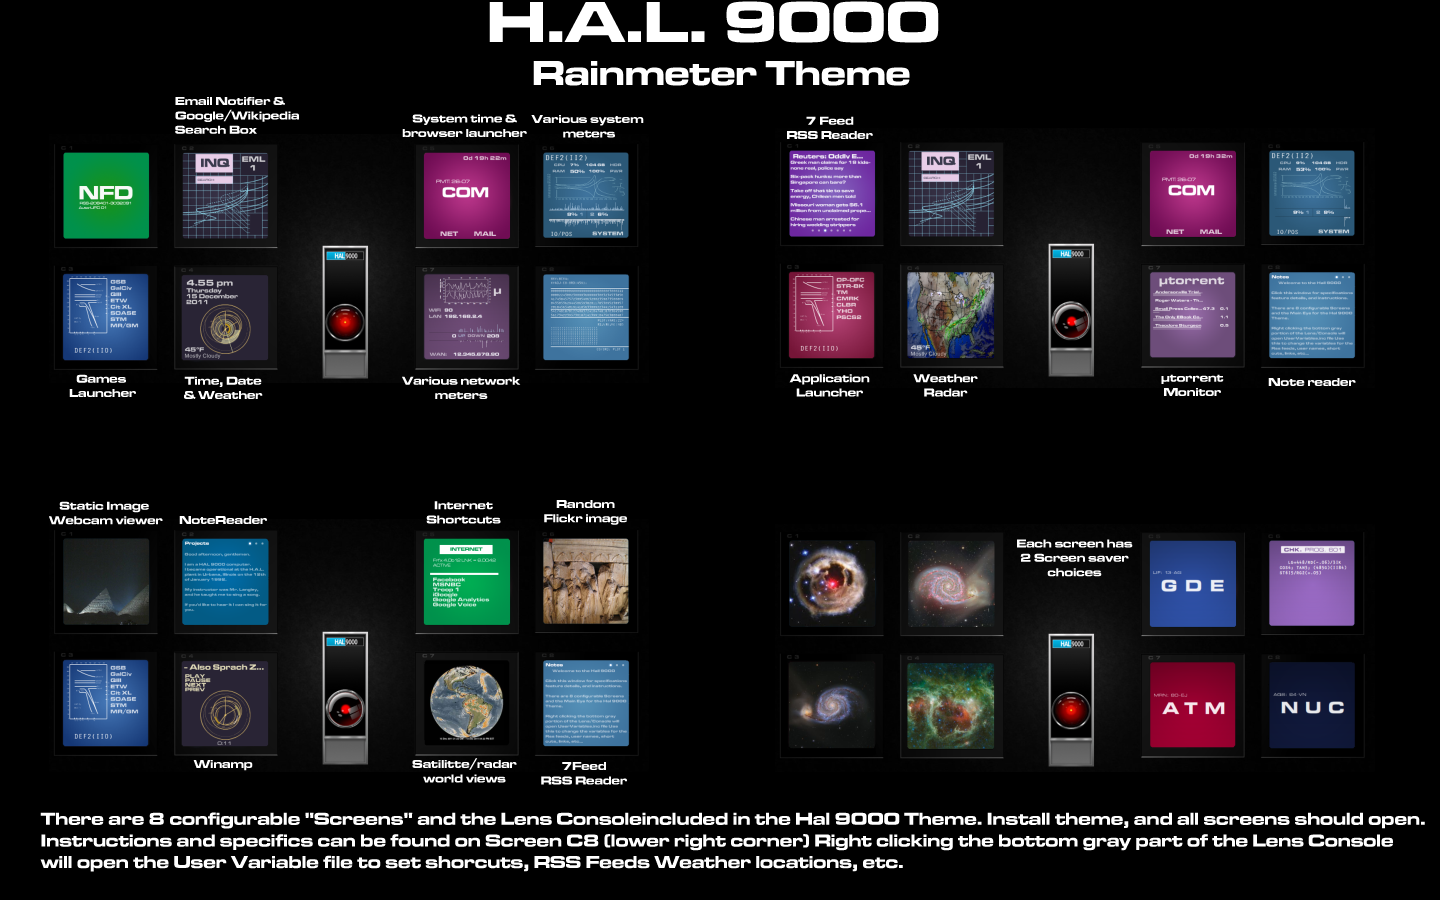 HAL 9000 Rainmeter Theme